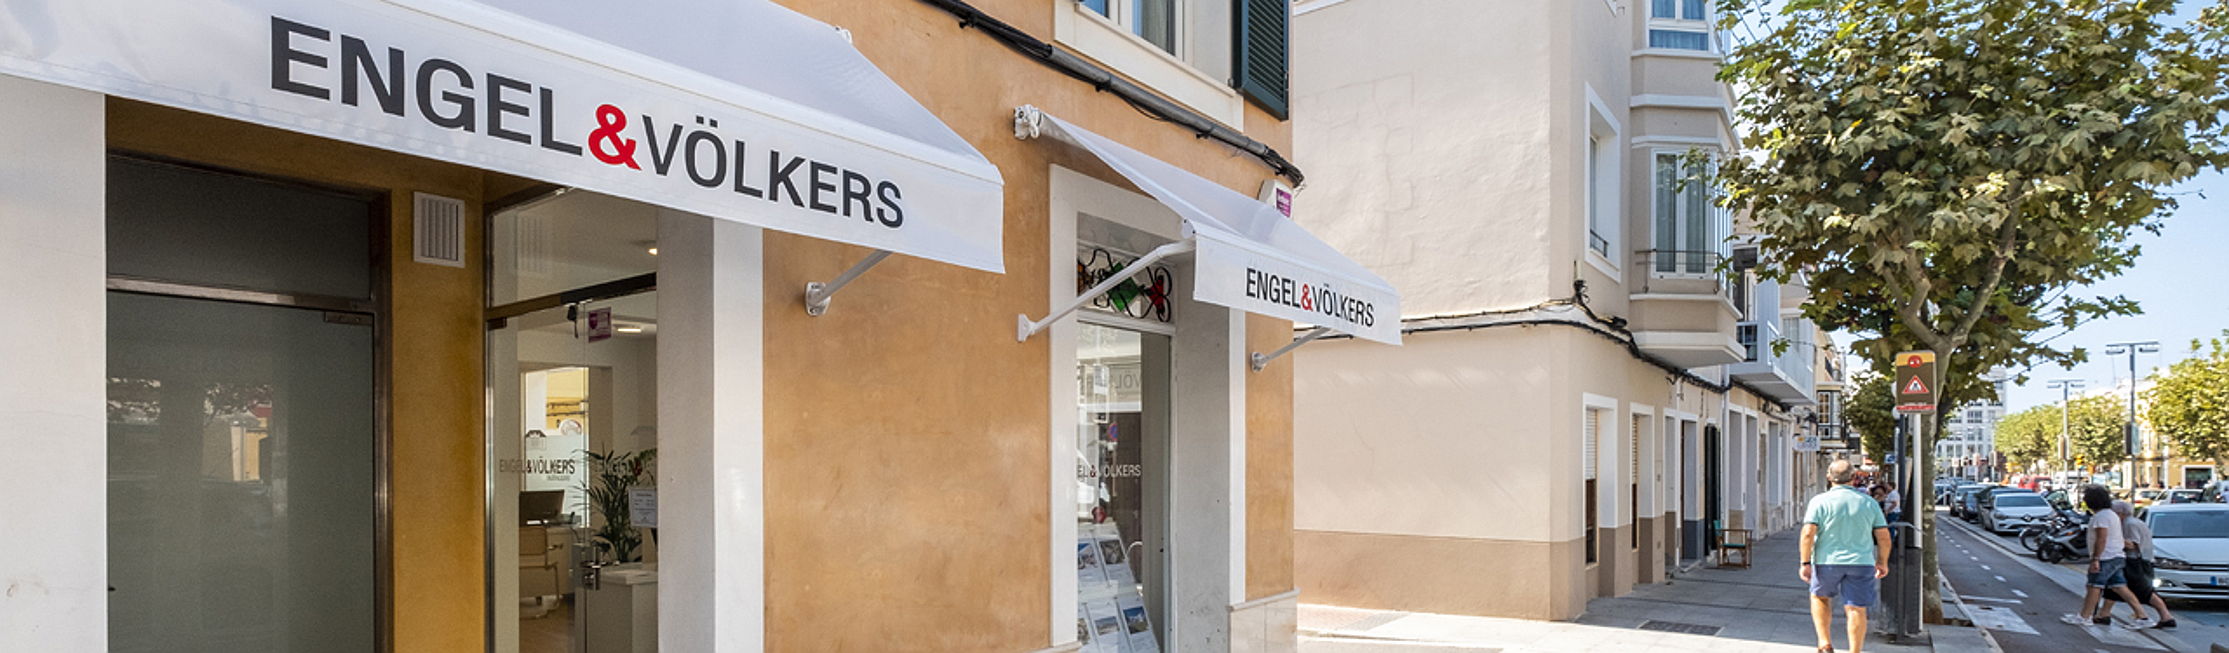  Mahón
- Engel & Völkers Ciutadella shop, Menorca